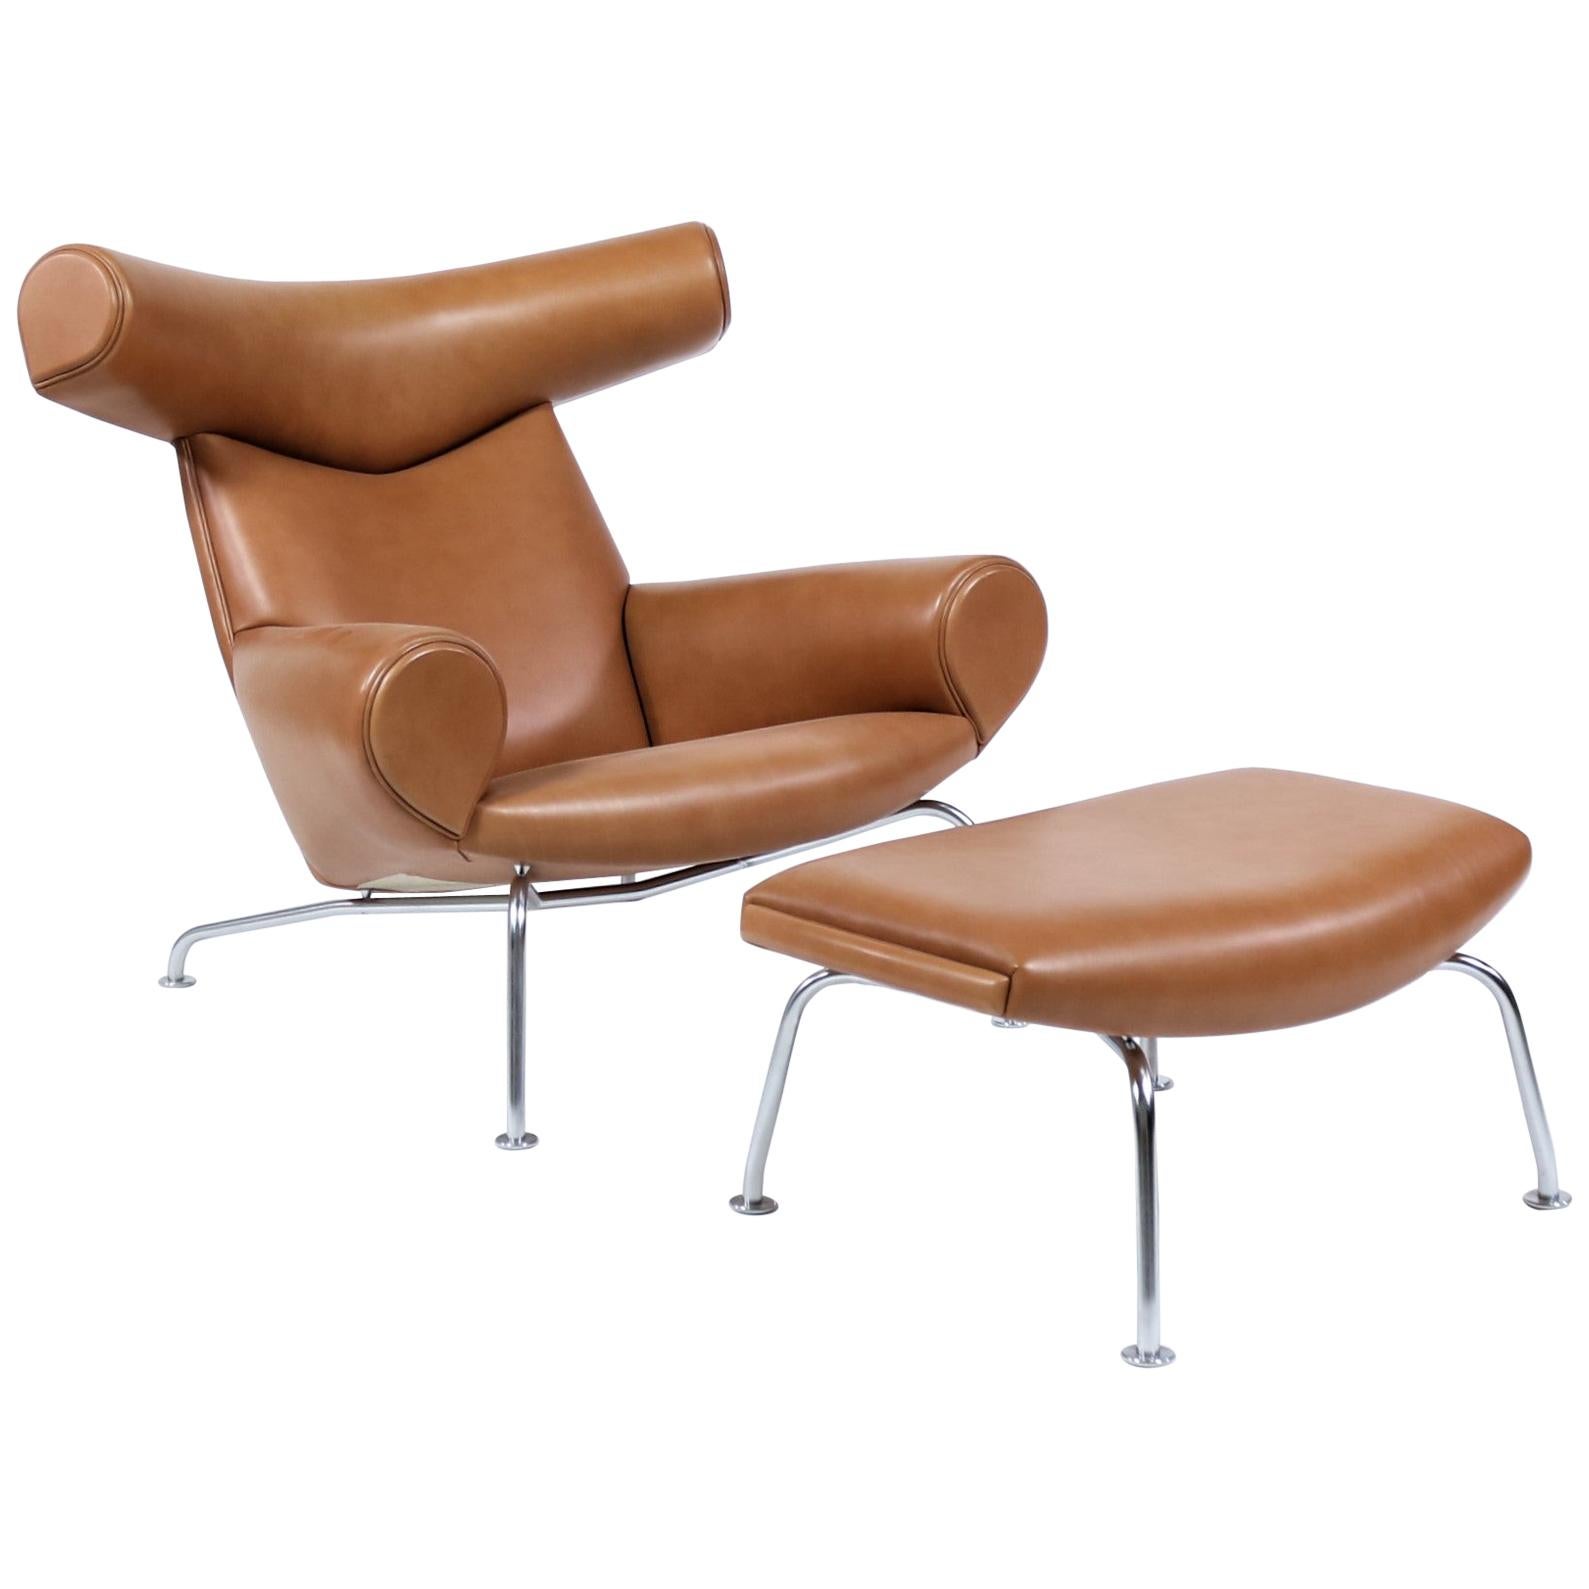 Hans J. Wegner "Ox" Lounge Chair and Ottoman in Cohiba Leather, Erik Jørgensen